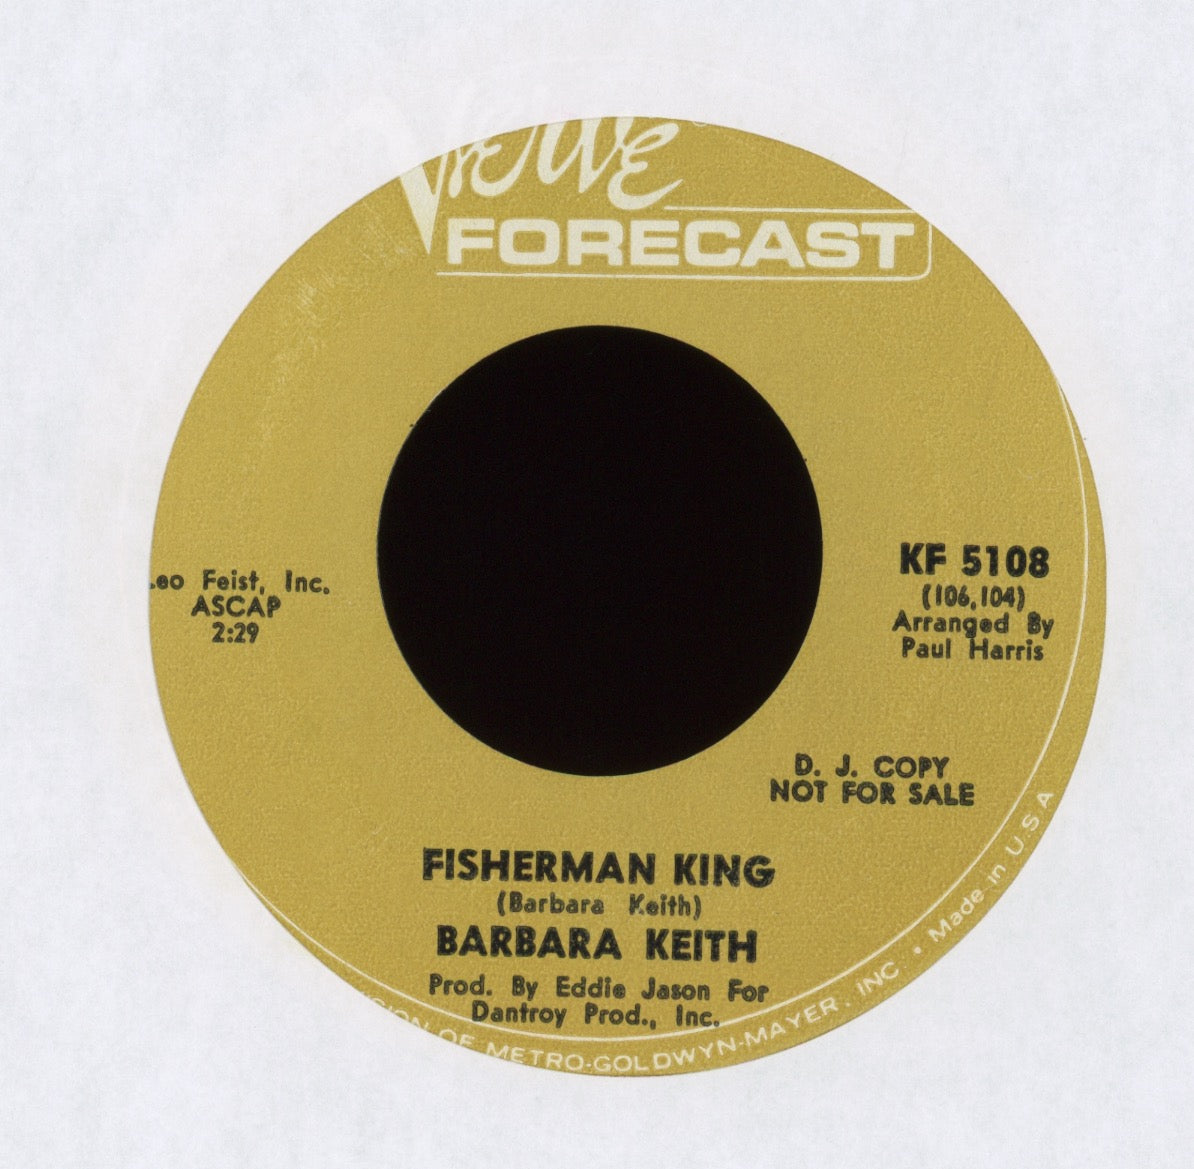 Barbara Keith - Fisherman King on Verve Forecast Promo Folk Rock 45